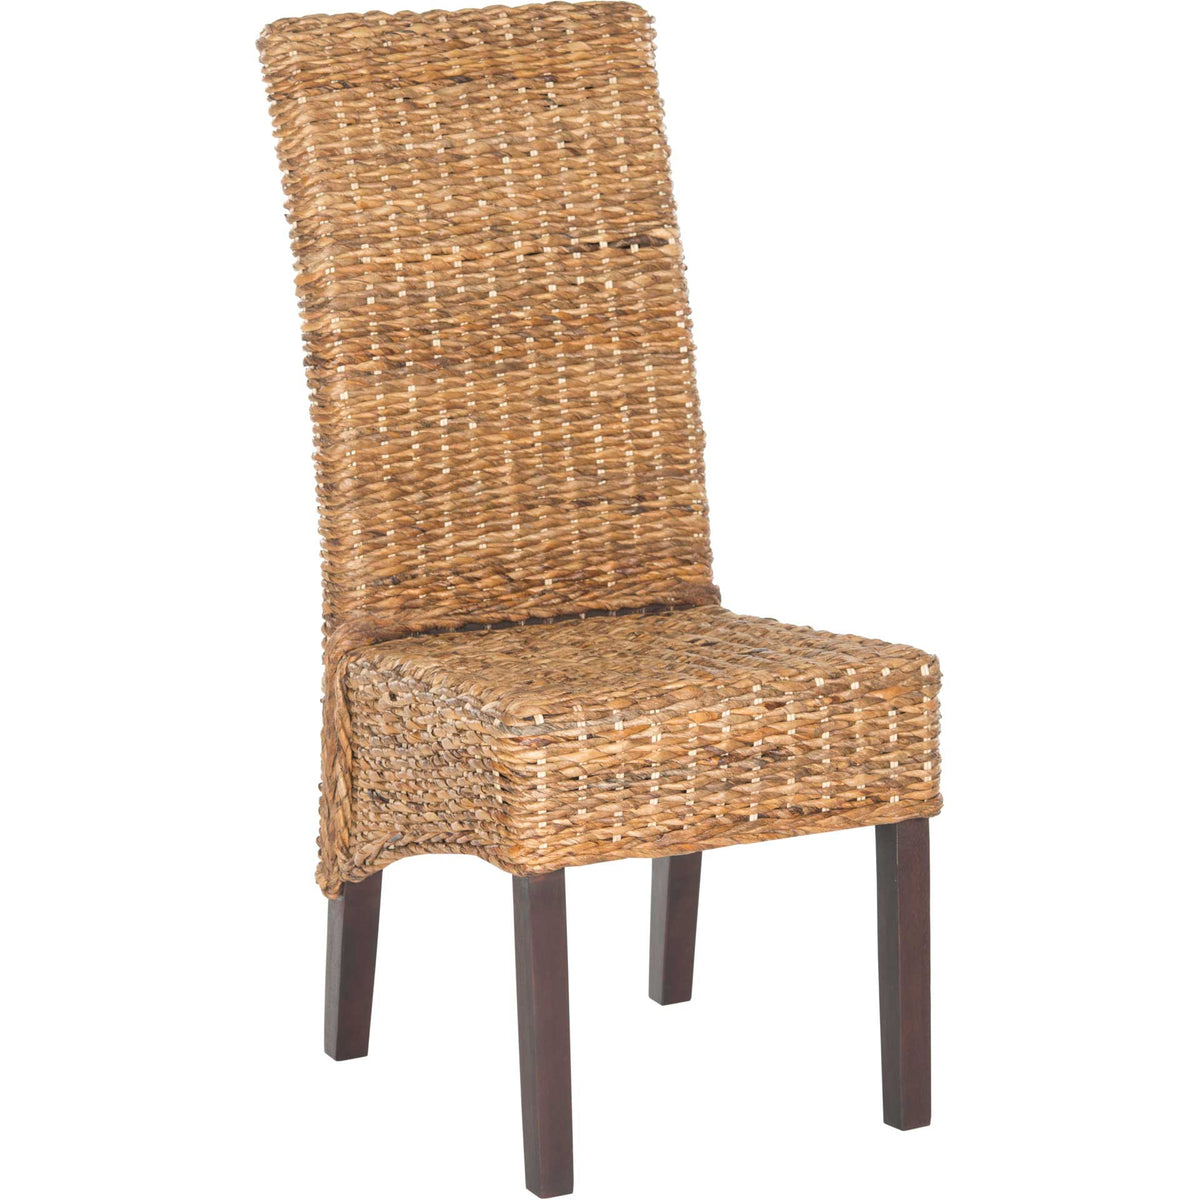 Bahati Side Chair Natural/Dark Brown (Set of 2)